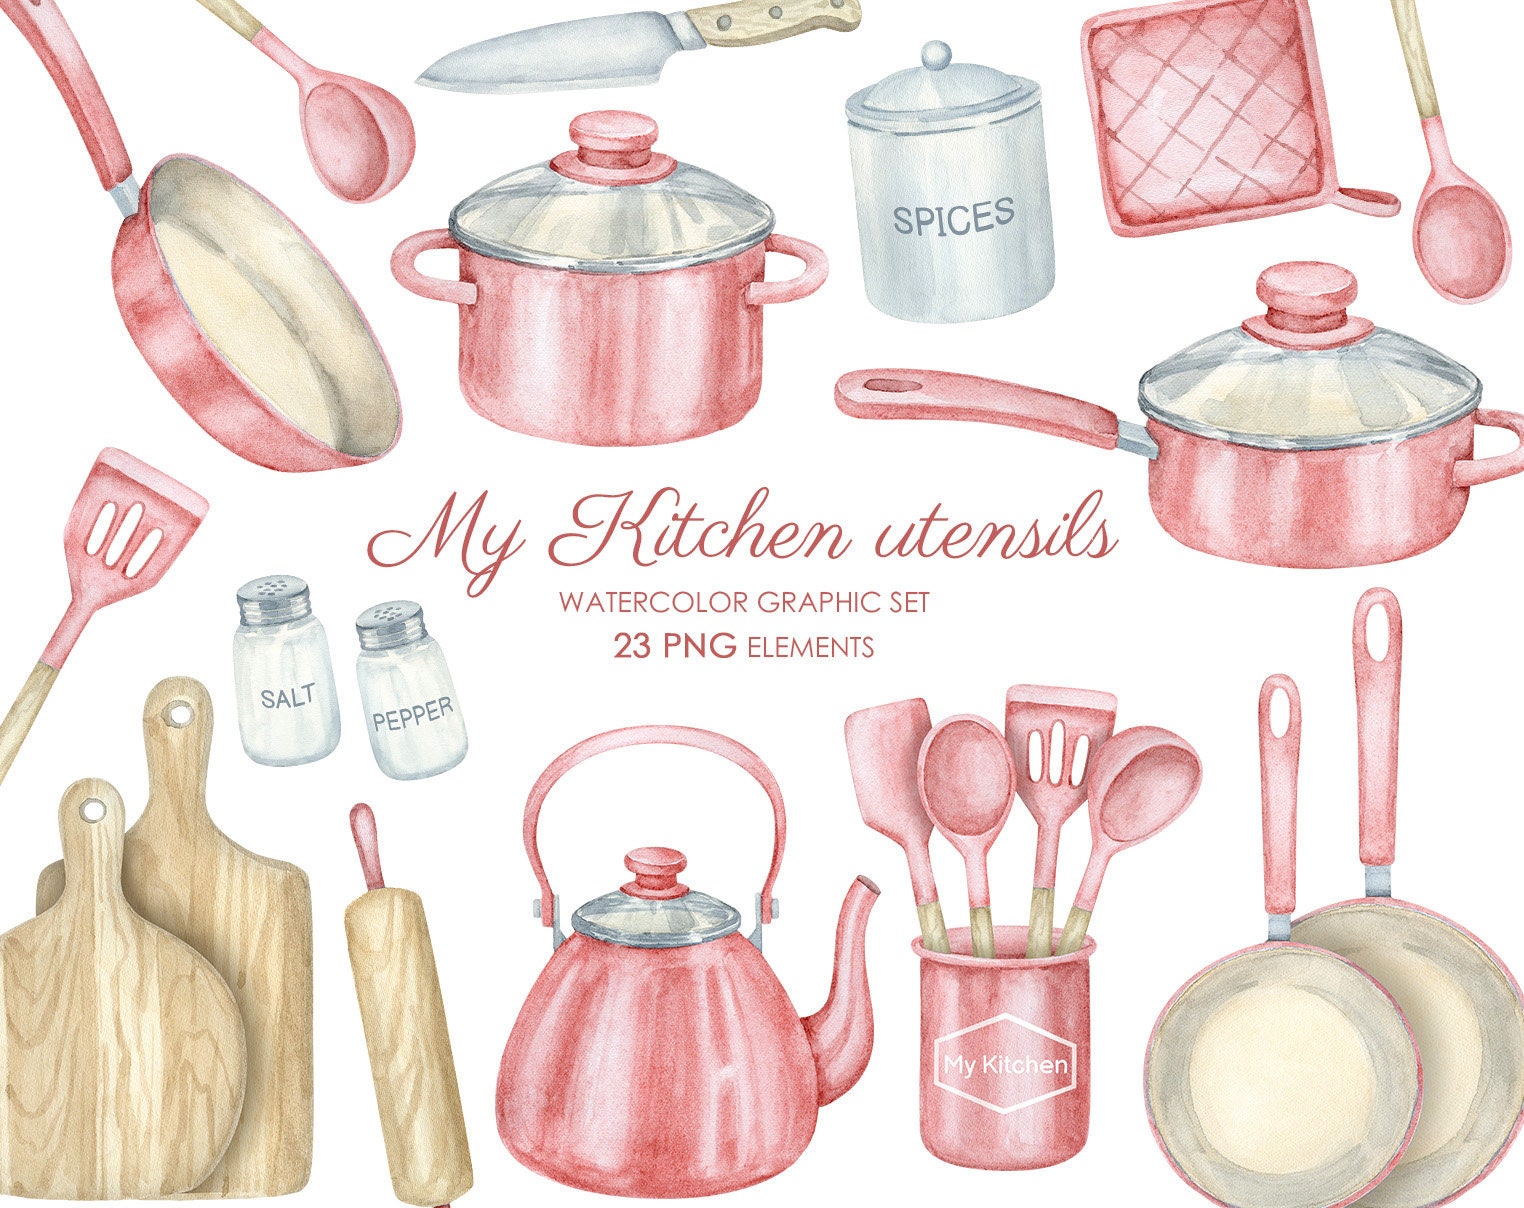 My Favorite Pink Kitchen Accessories - Horses & Heels